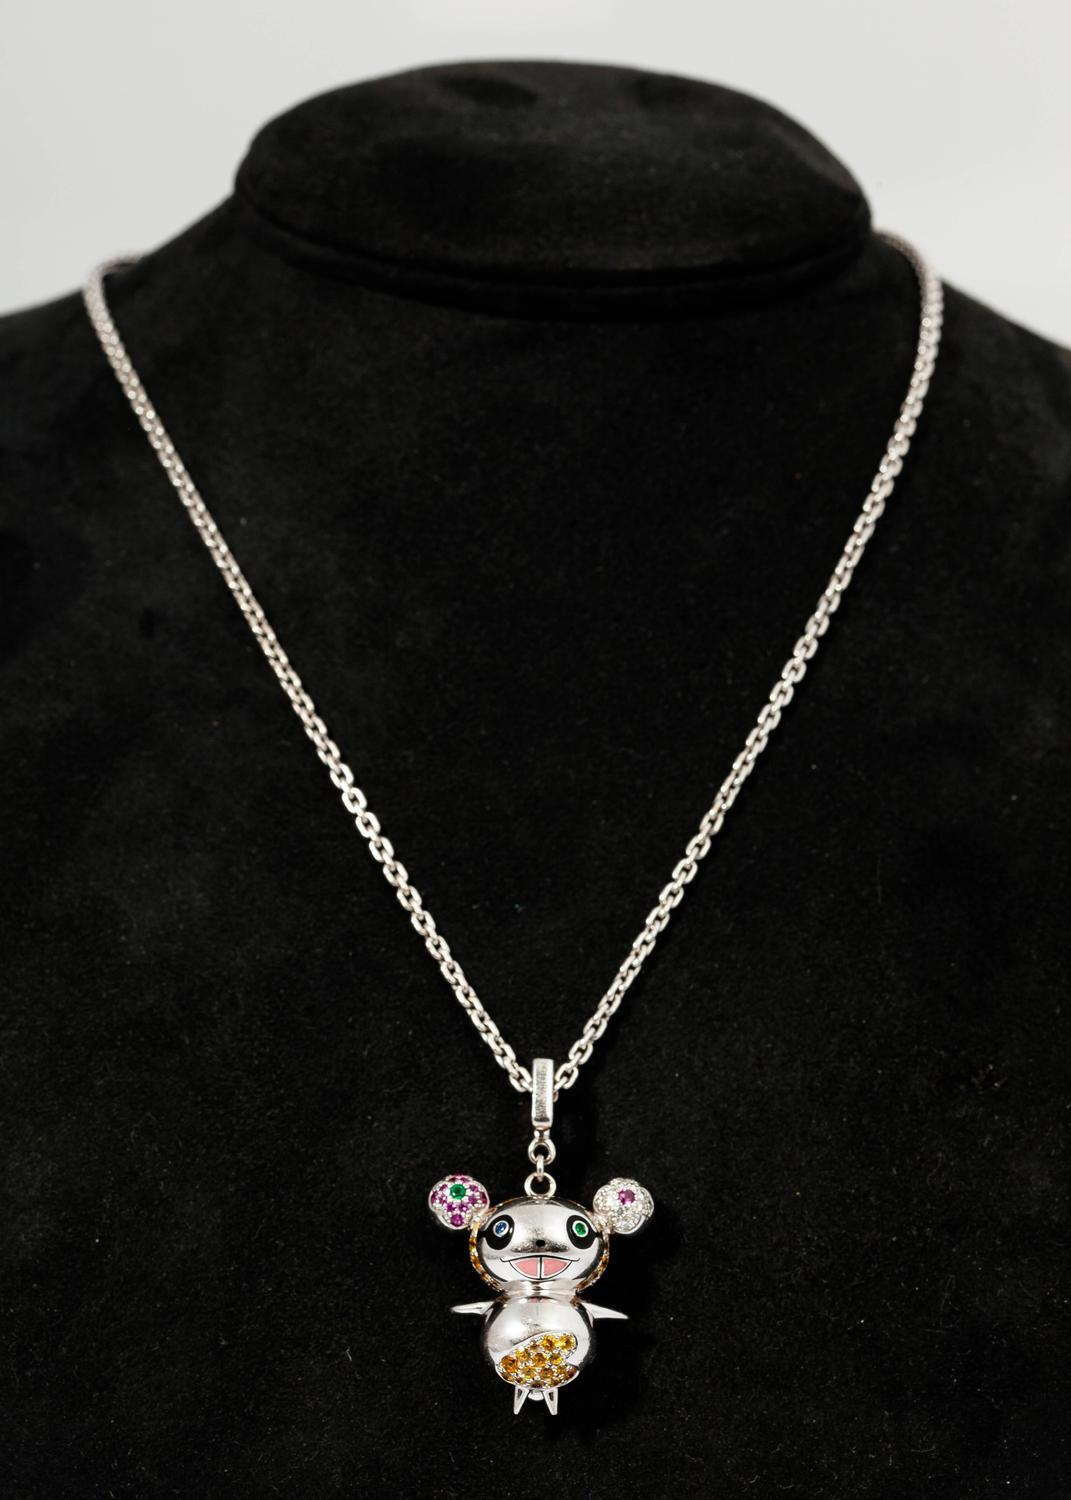 louis vuitton Takashi Murakami Gold Diamond Panda Pendant Charm. For Sale at 1stdibs